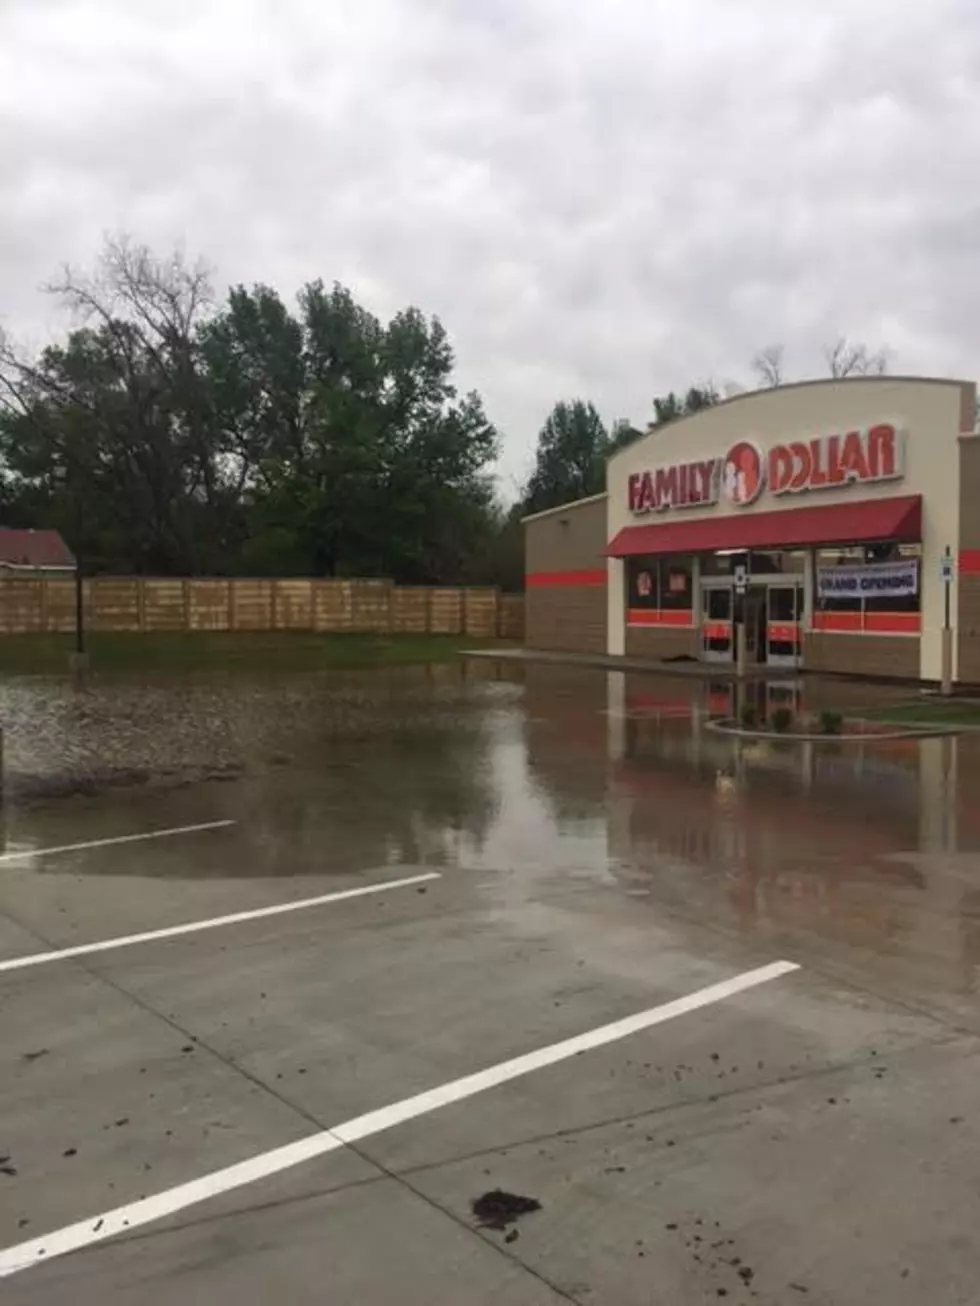 Closed: Family Dollar Closes Alabama Stores For Decontamination